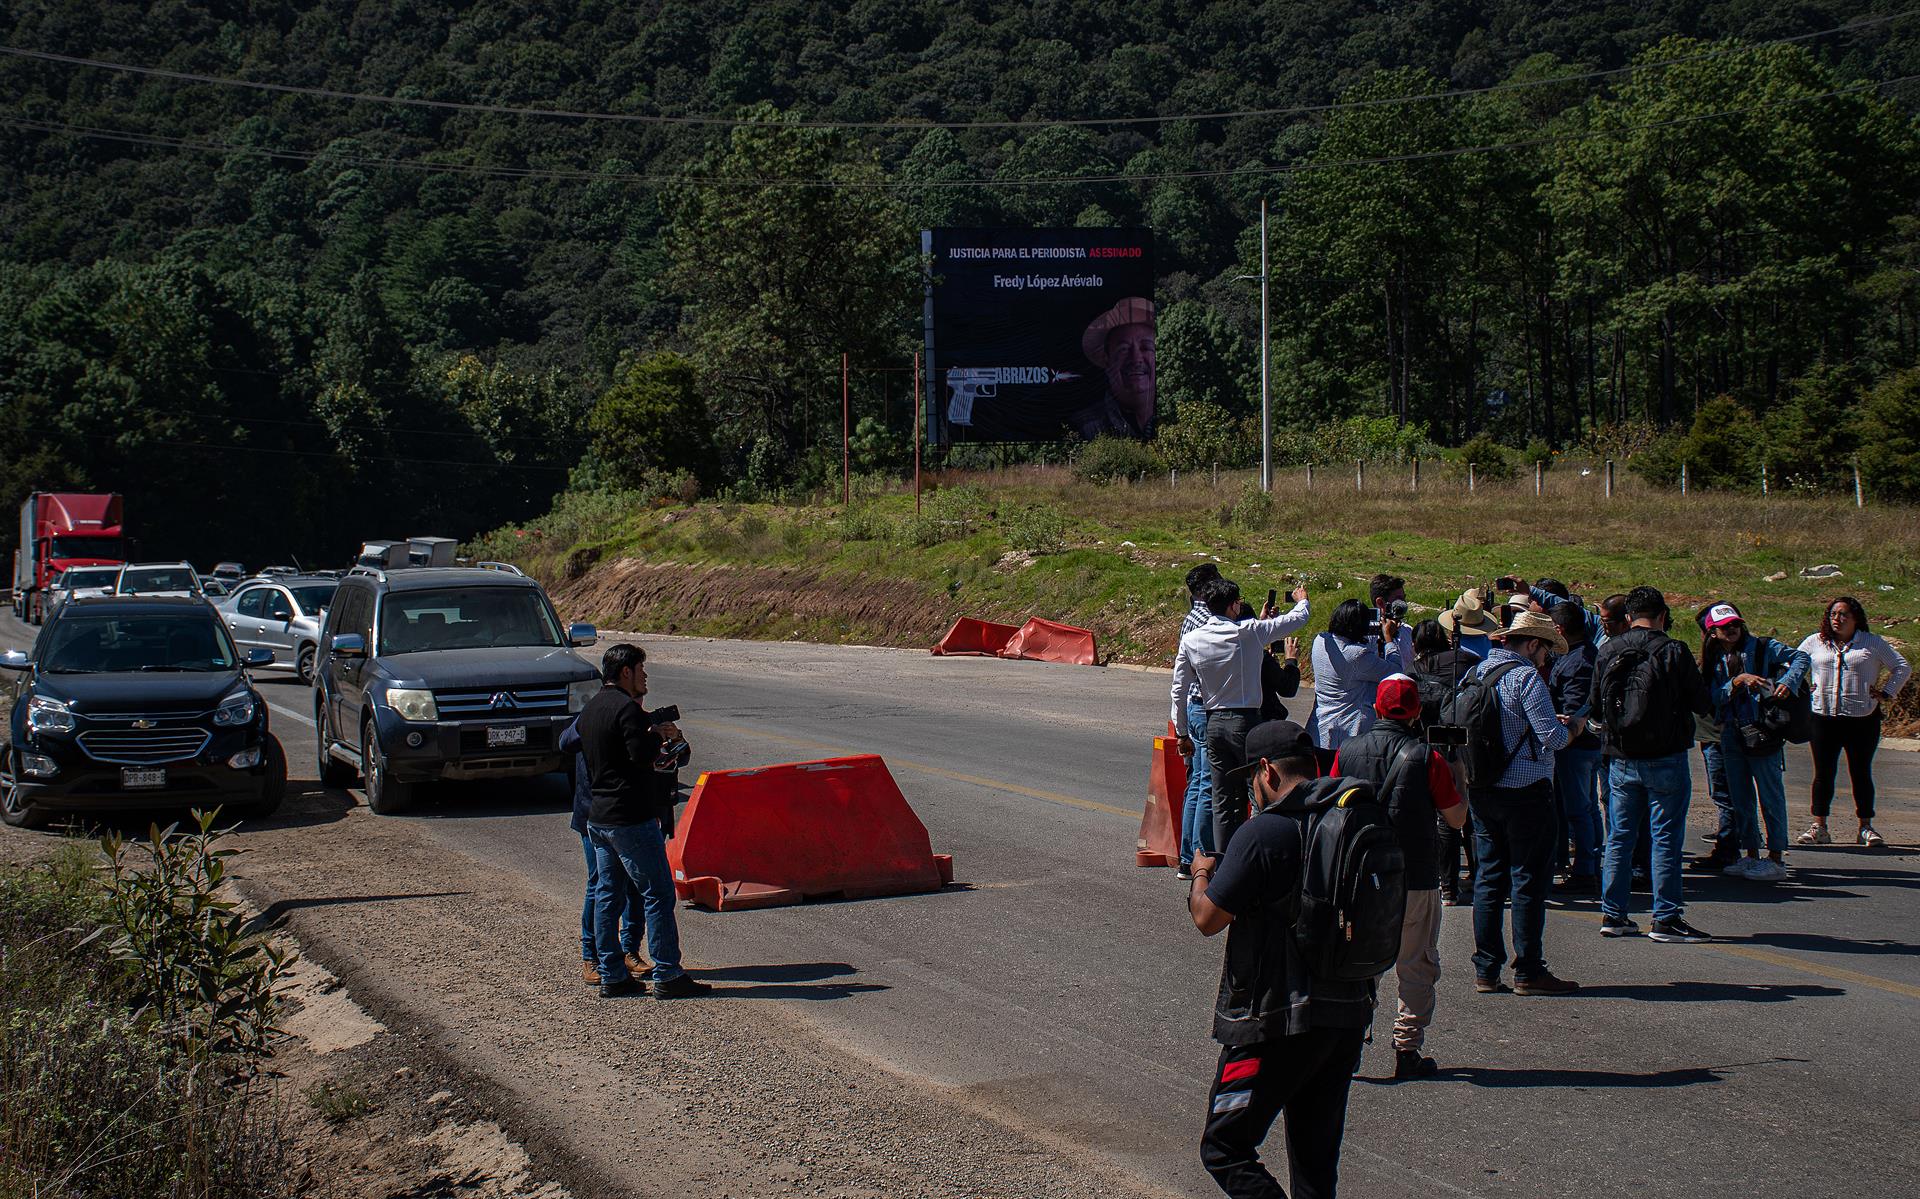 protestas asesinato periodista fredy lopez mexico